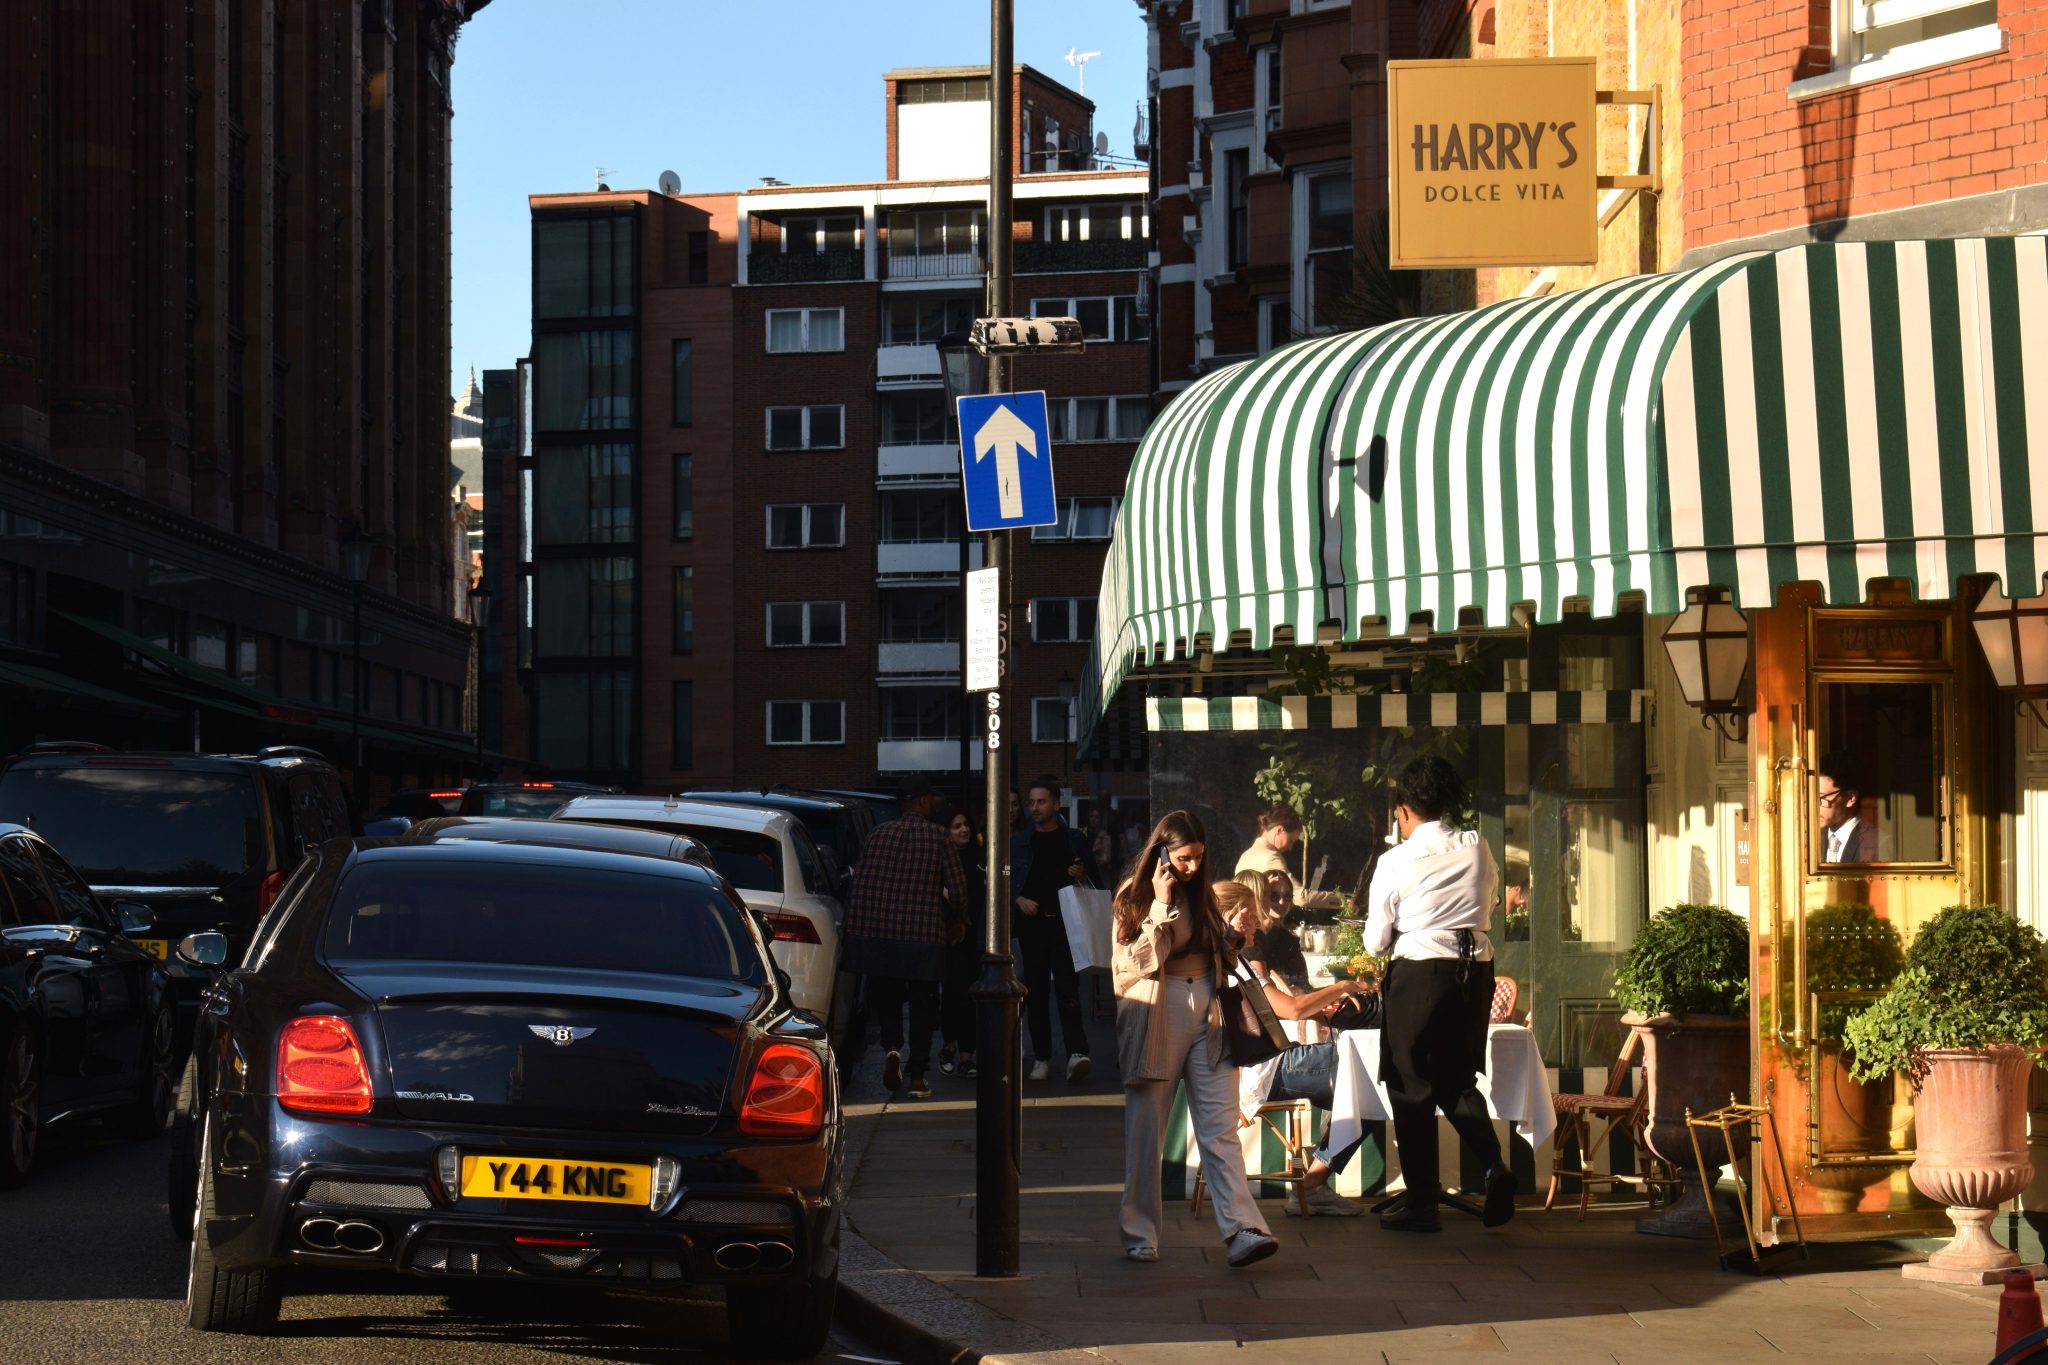 External shot of Harry's Dolce Vita restaurant in Knightsbridge